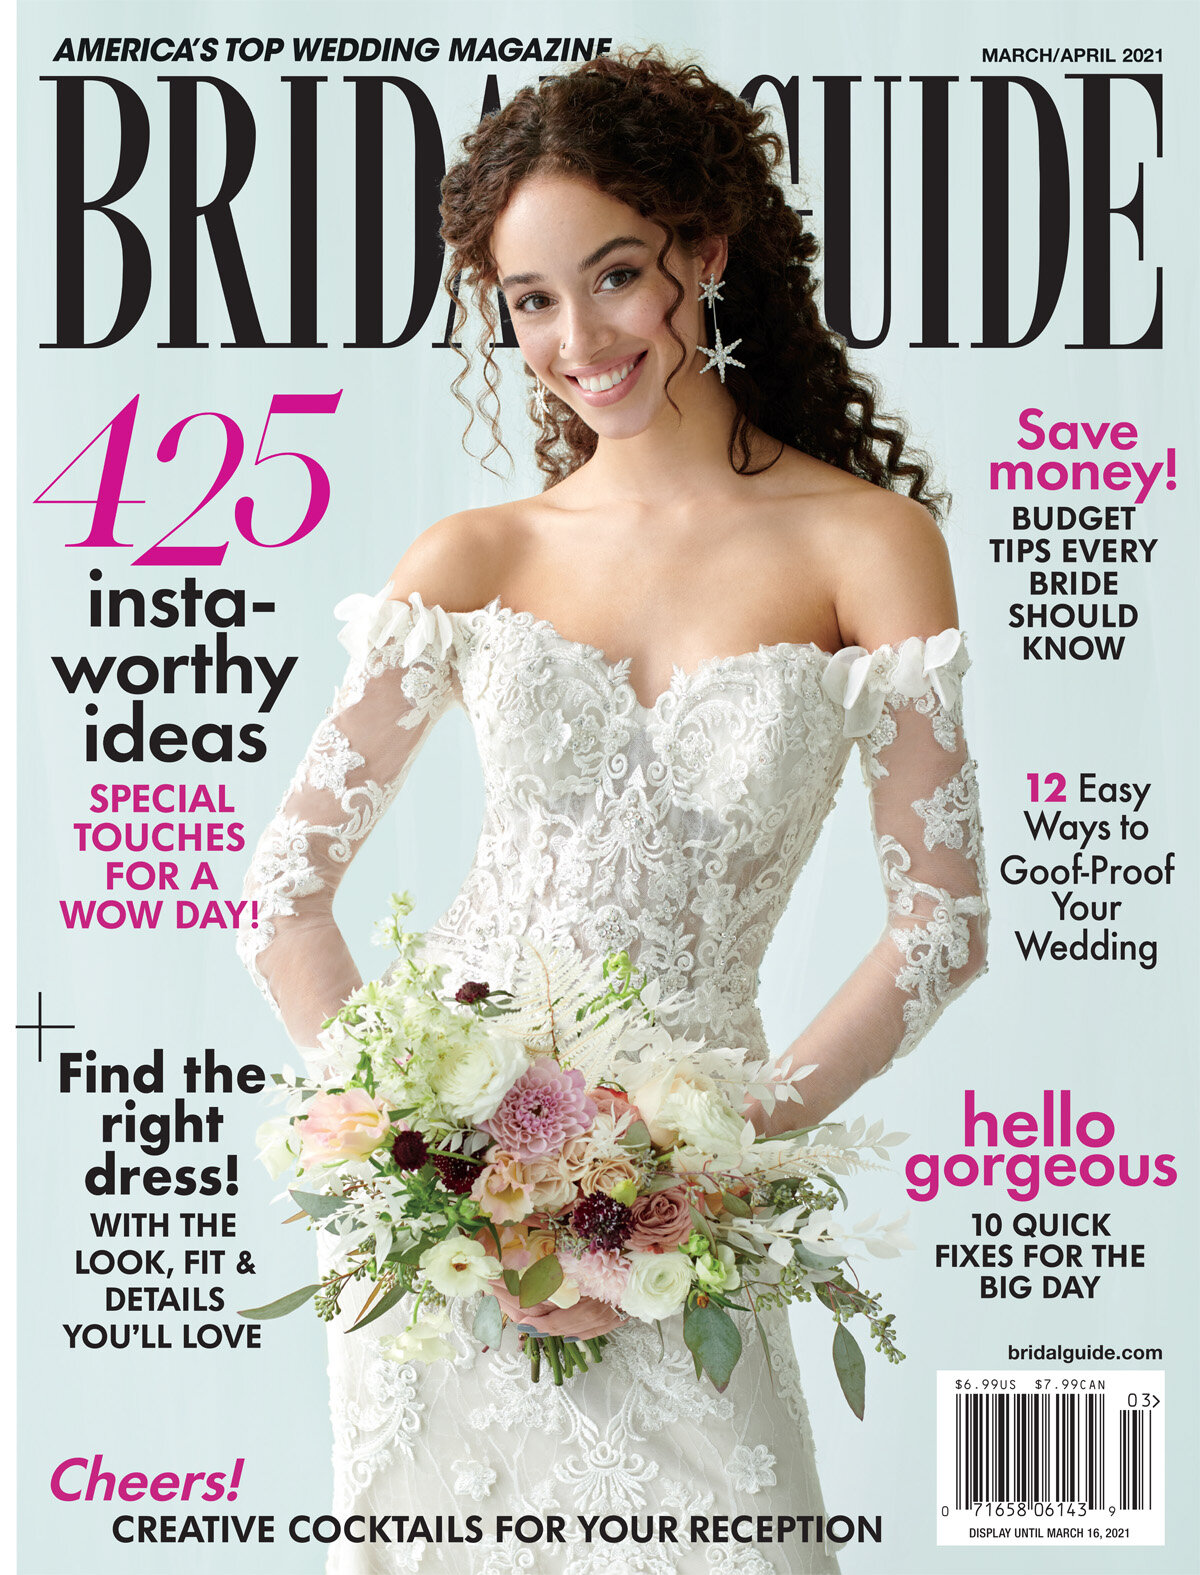 Bridal Guide_MA21COVER.jpg